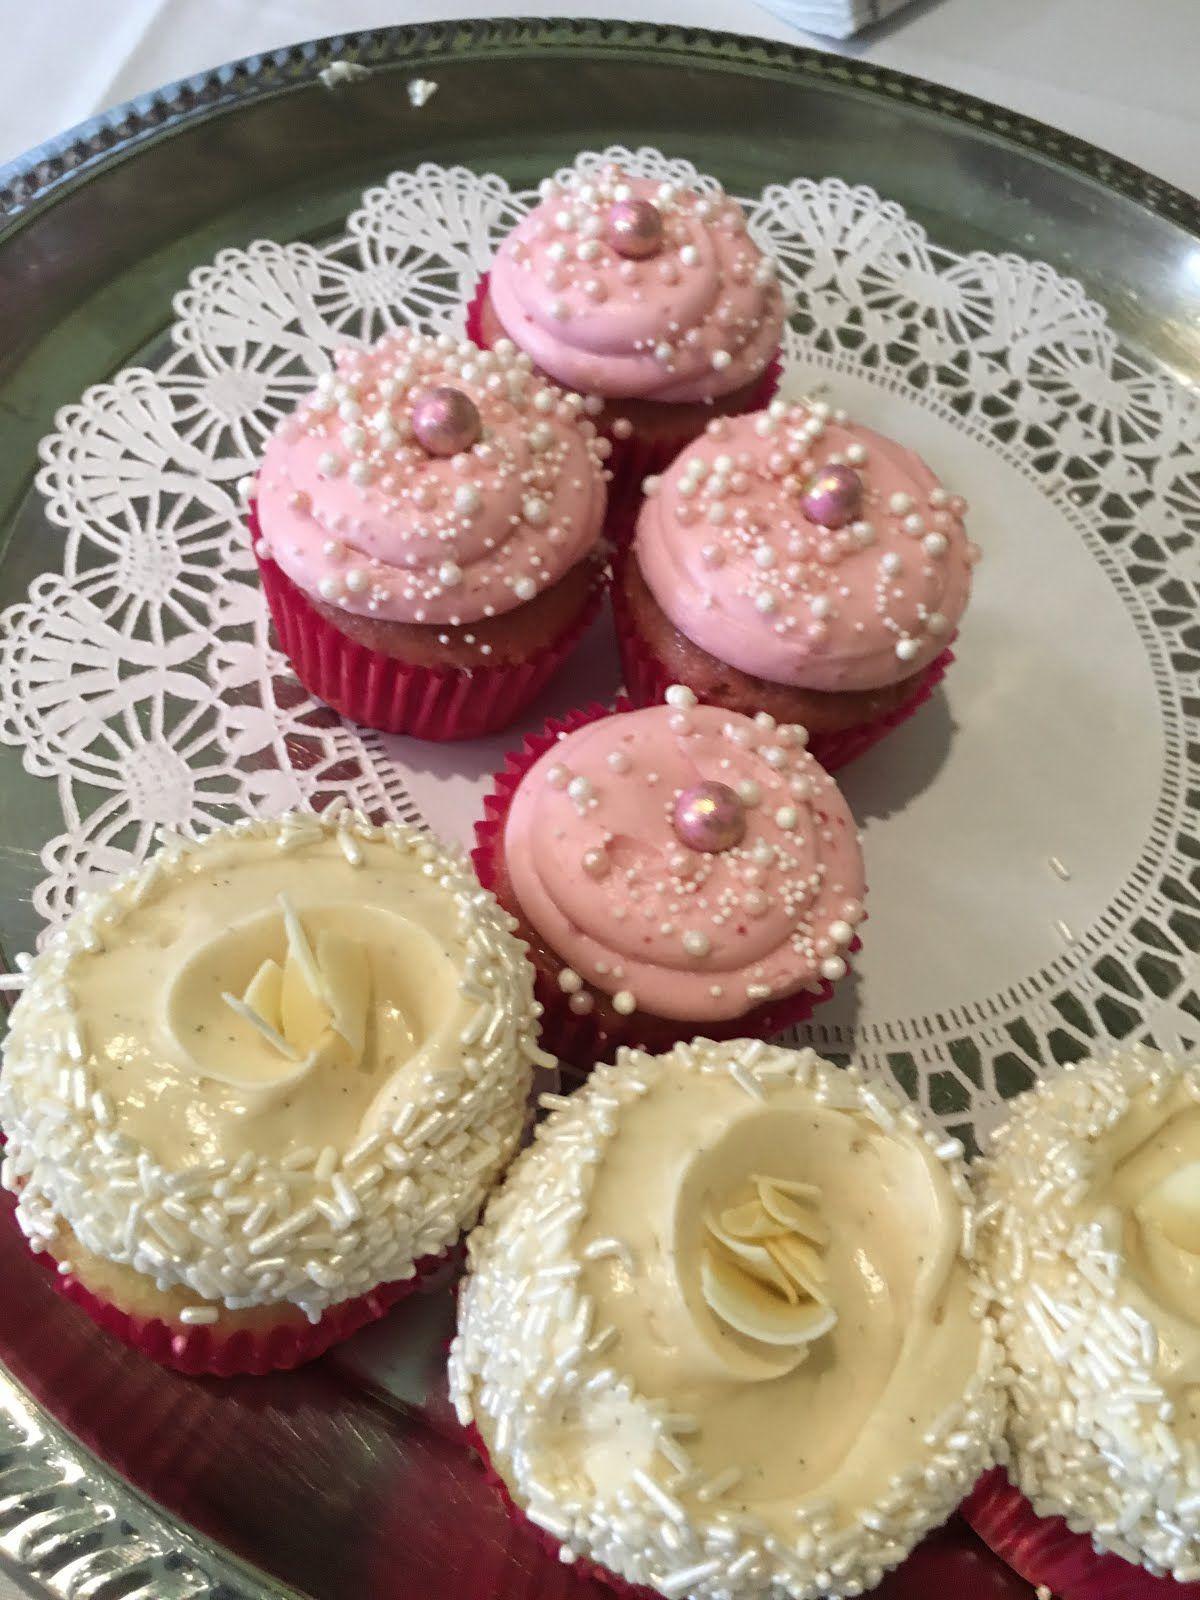 Designer Desserts opens cupcake shop Thursday in S'ville | Eat